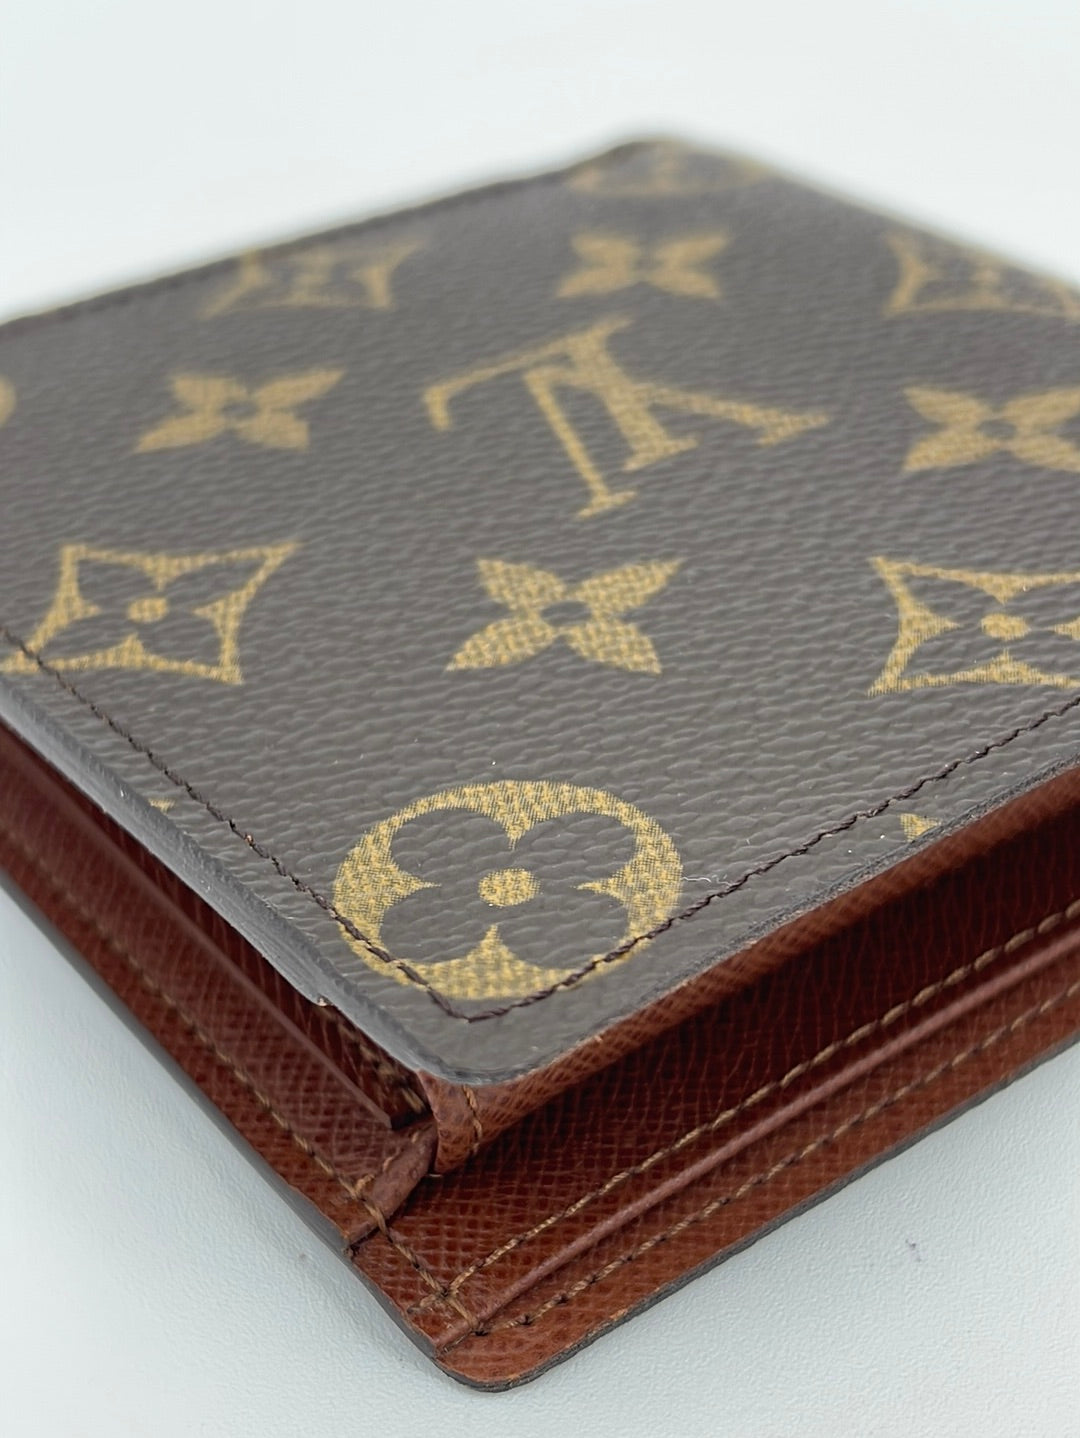 Preloved Louis Vuitton Men's Bifold Monogram Wallet VI1010 041922